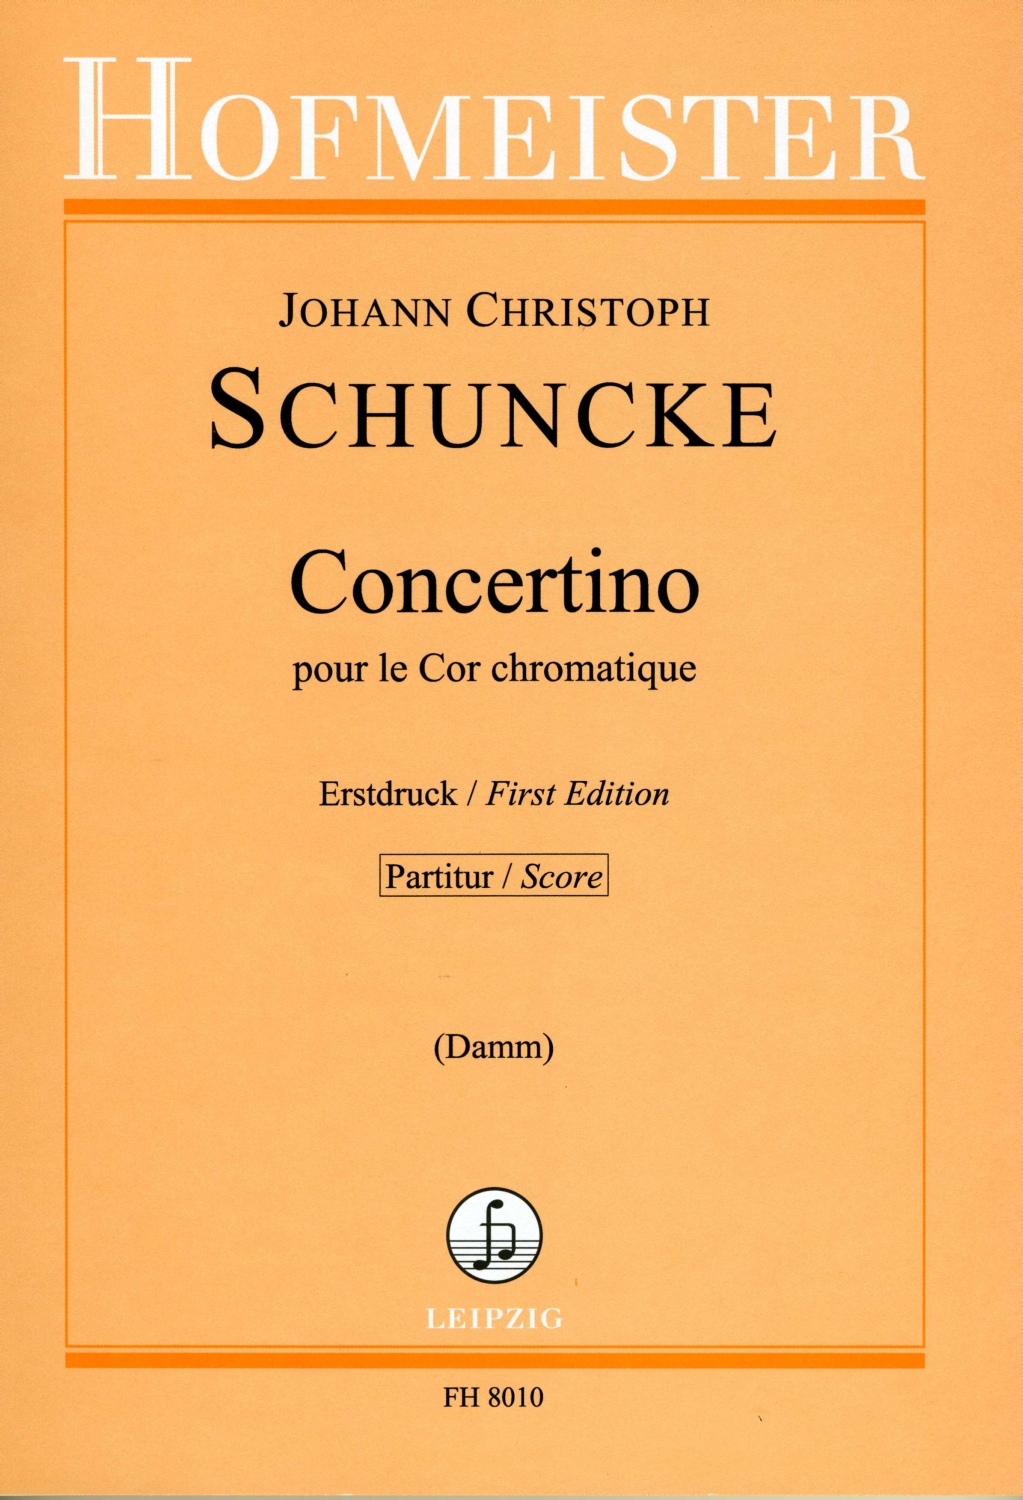 johann-christoph-schuncke-concertino-hr-orch-_part_0001.JPG